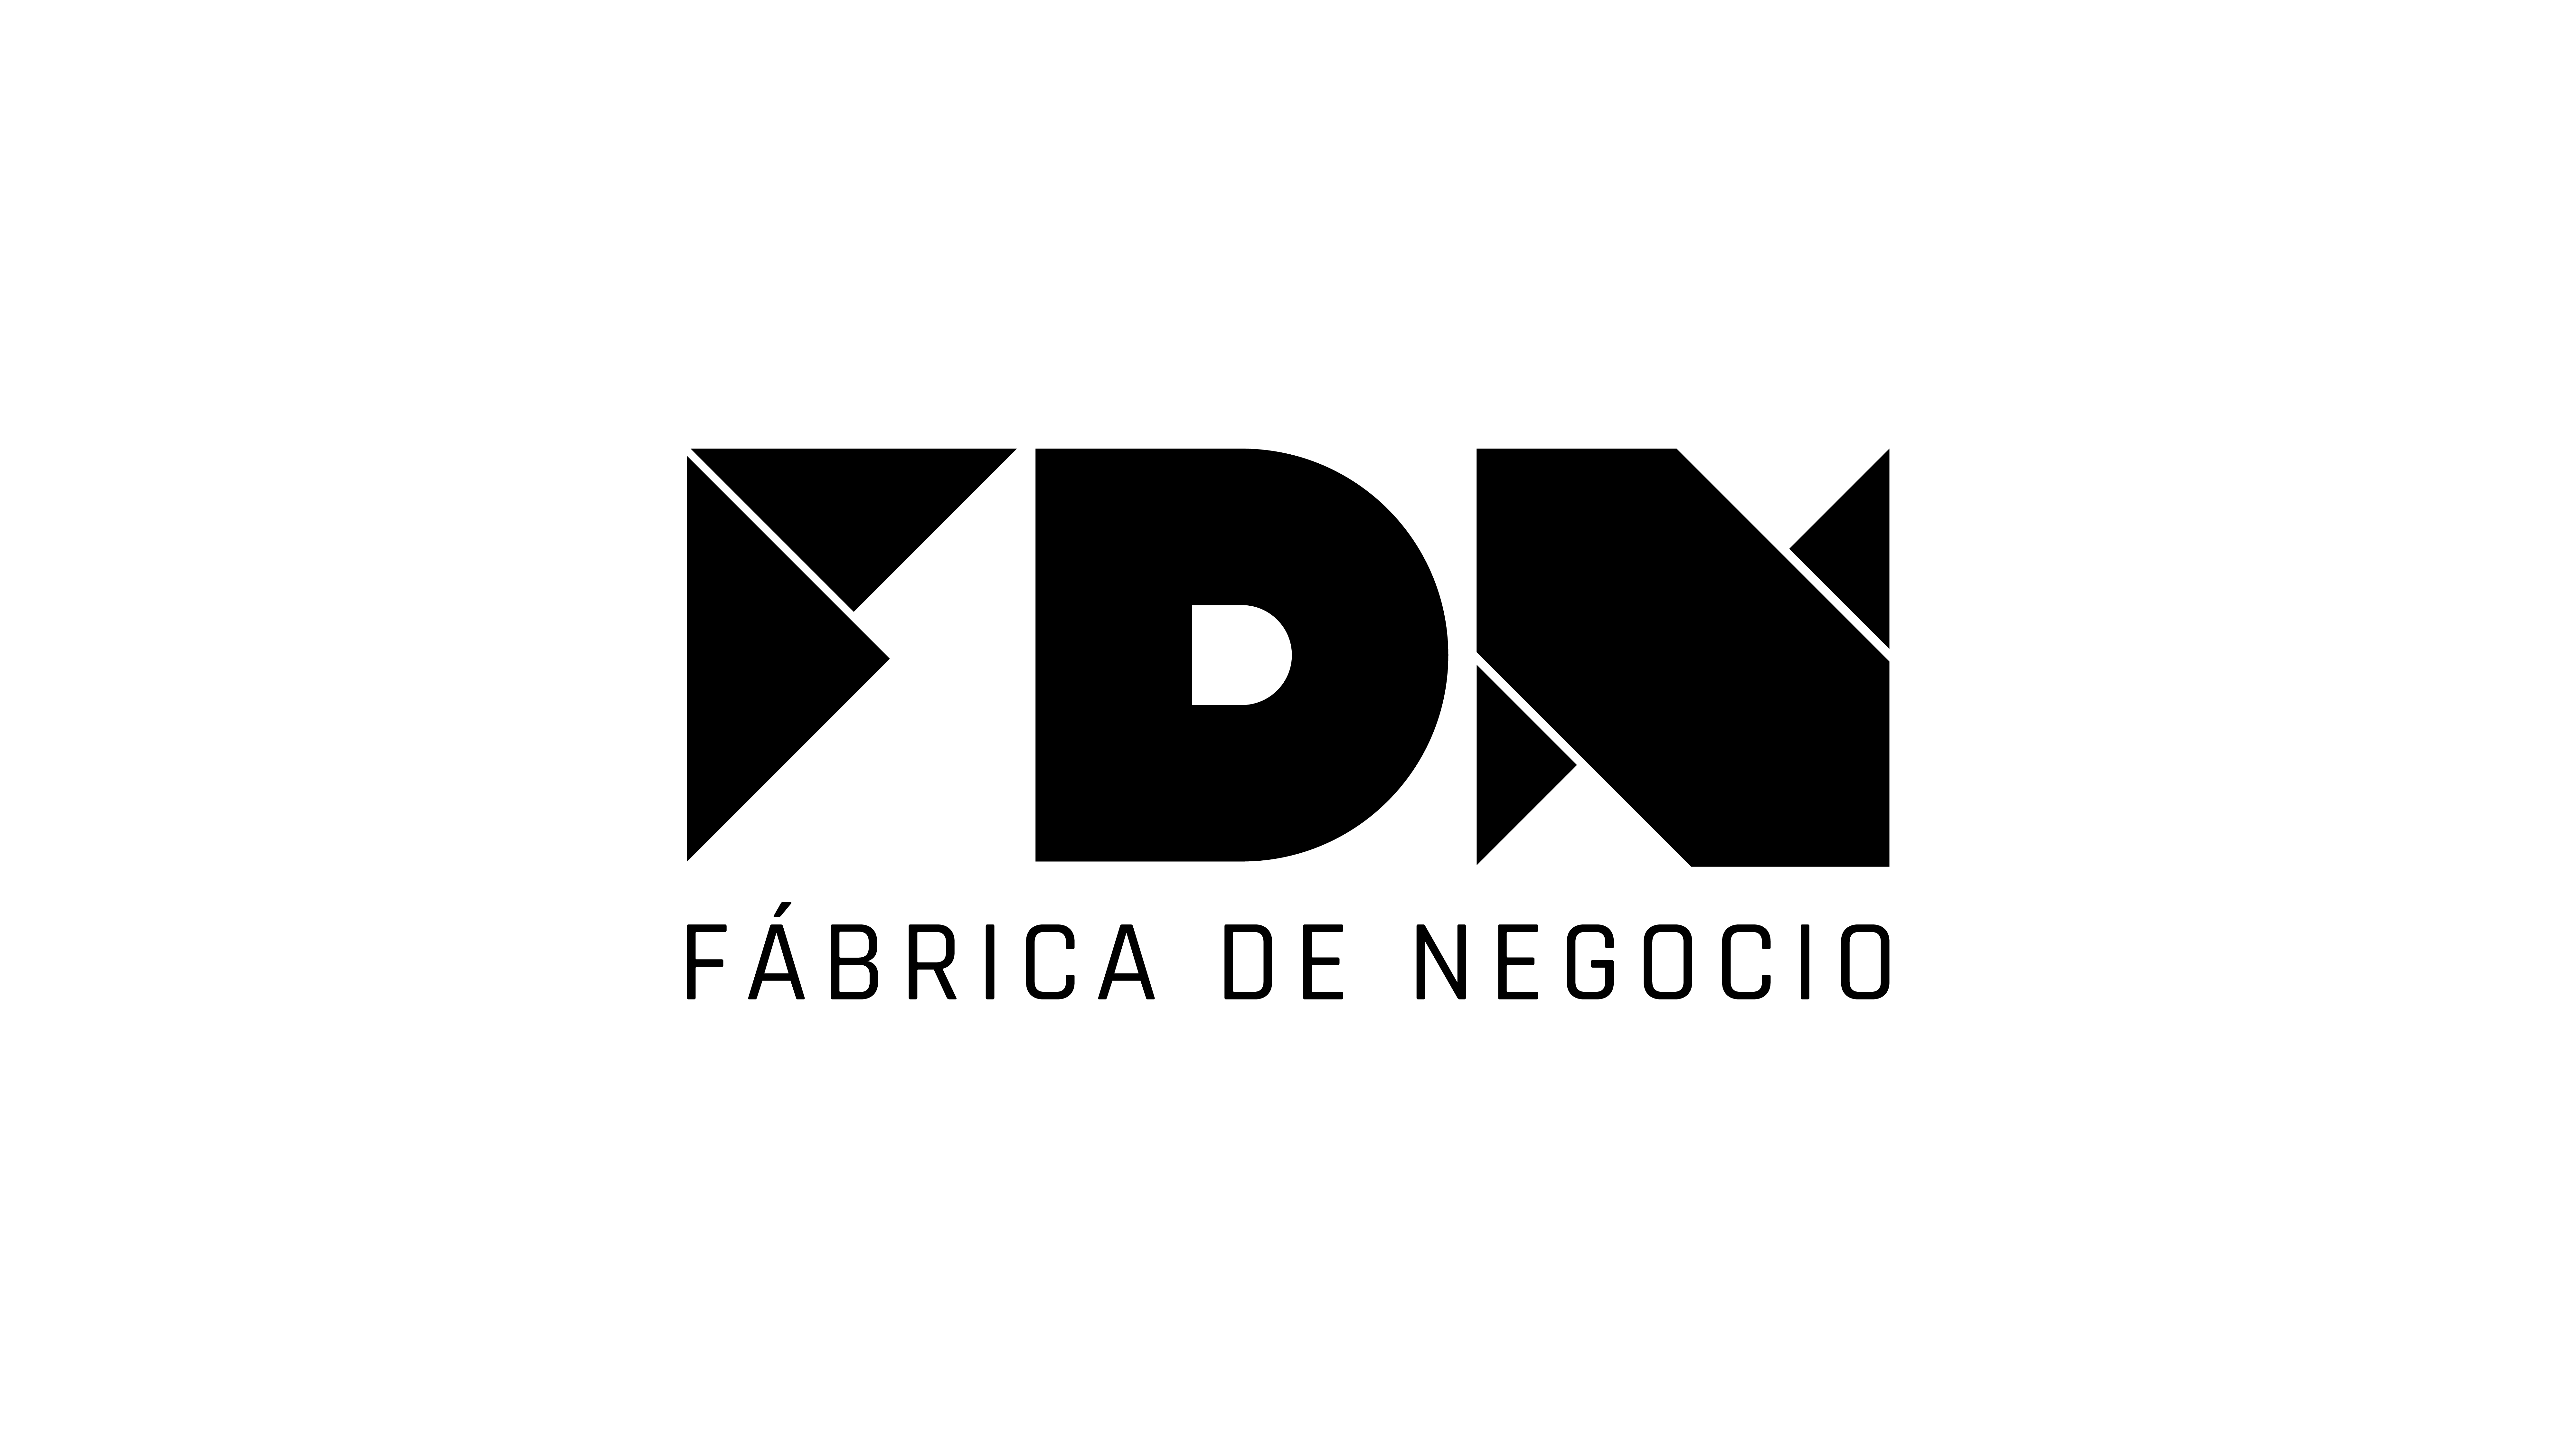 FDN Logo_BLK